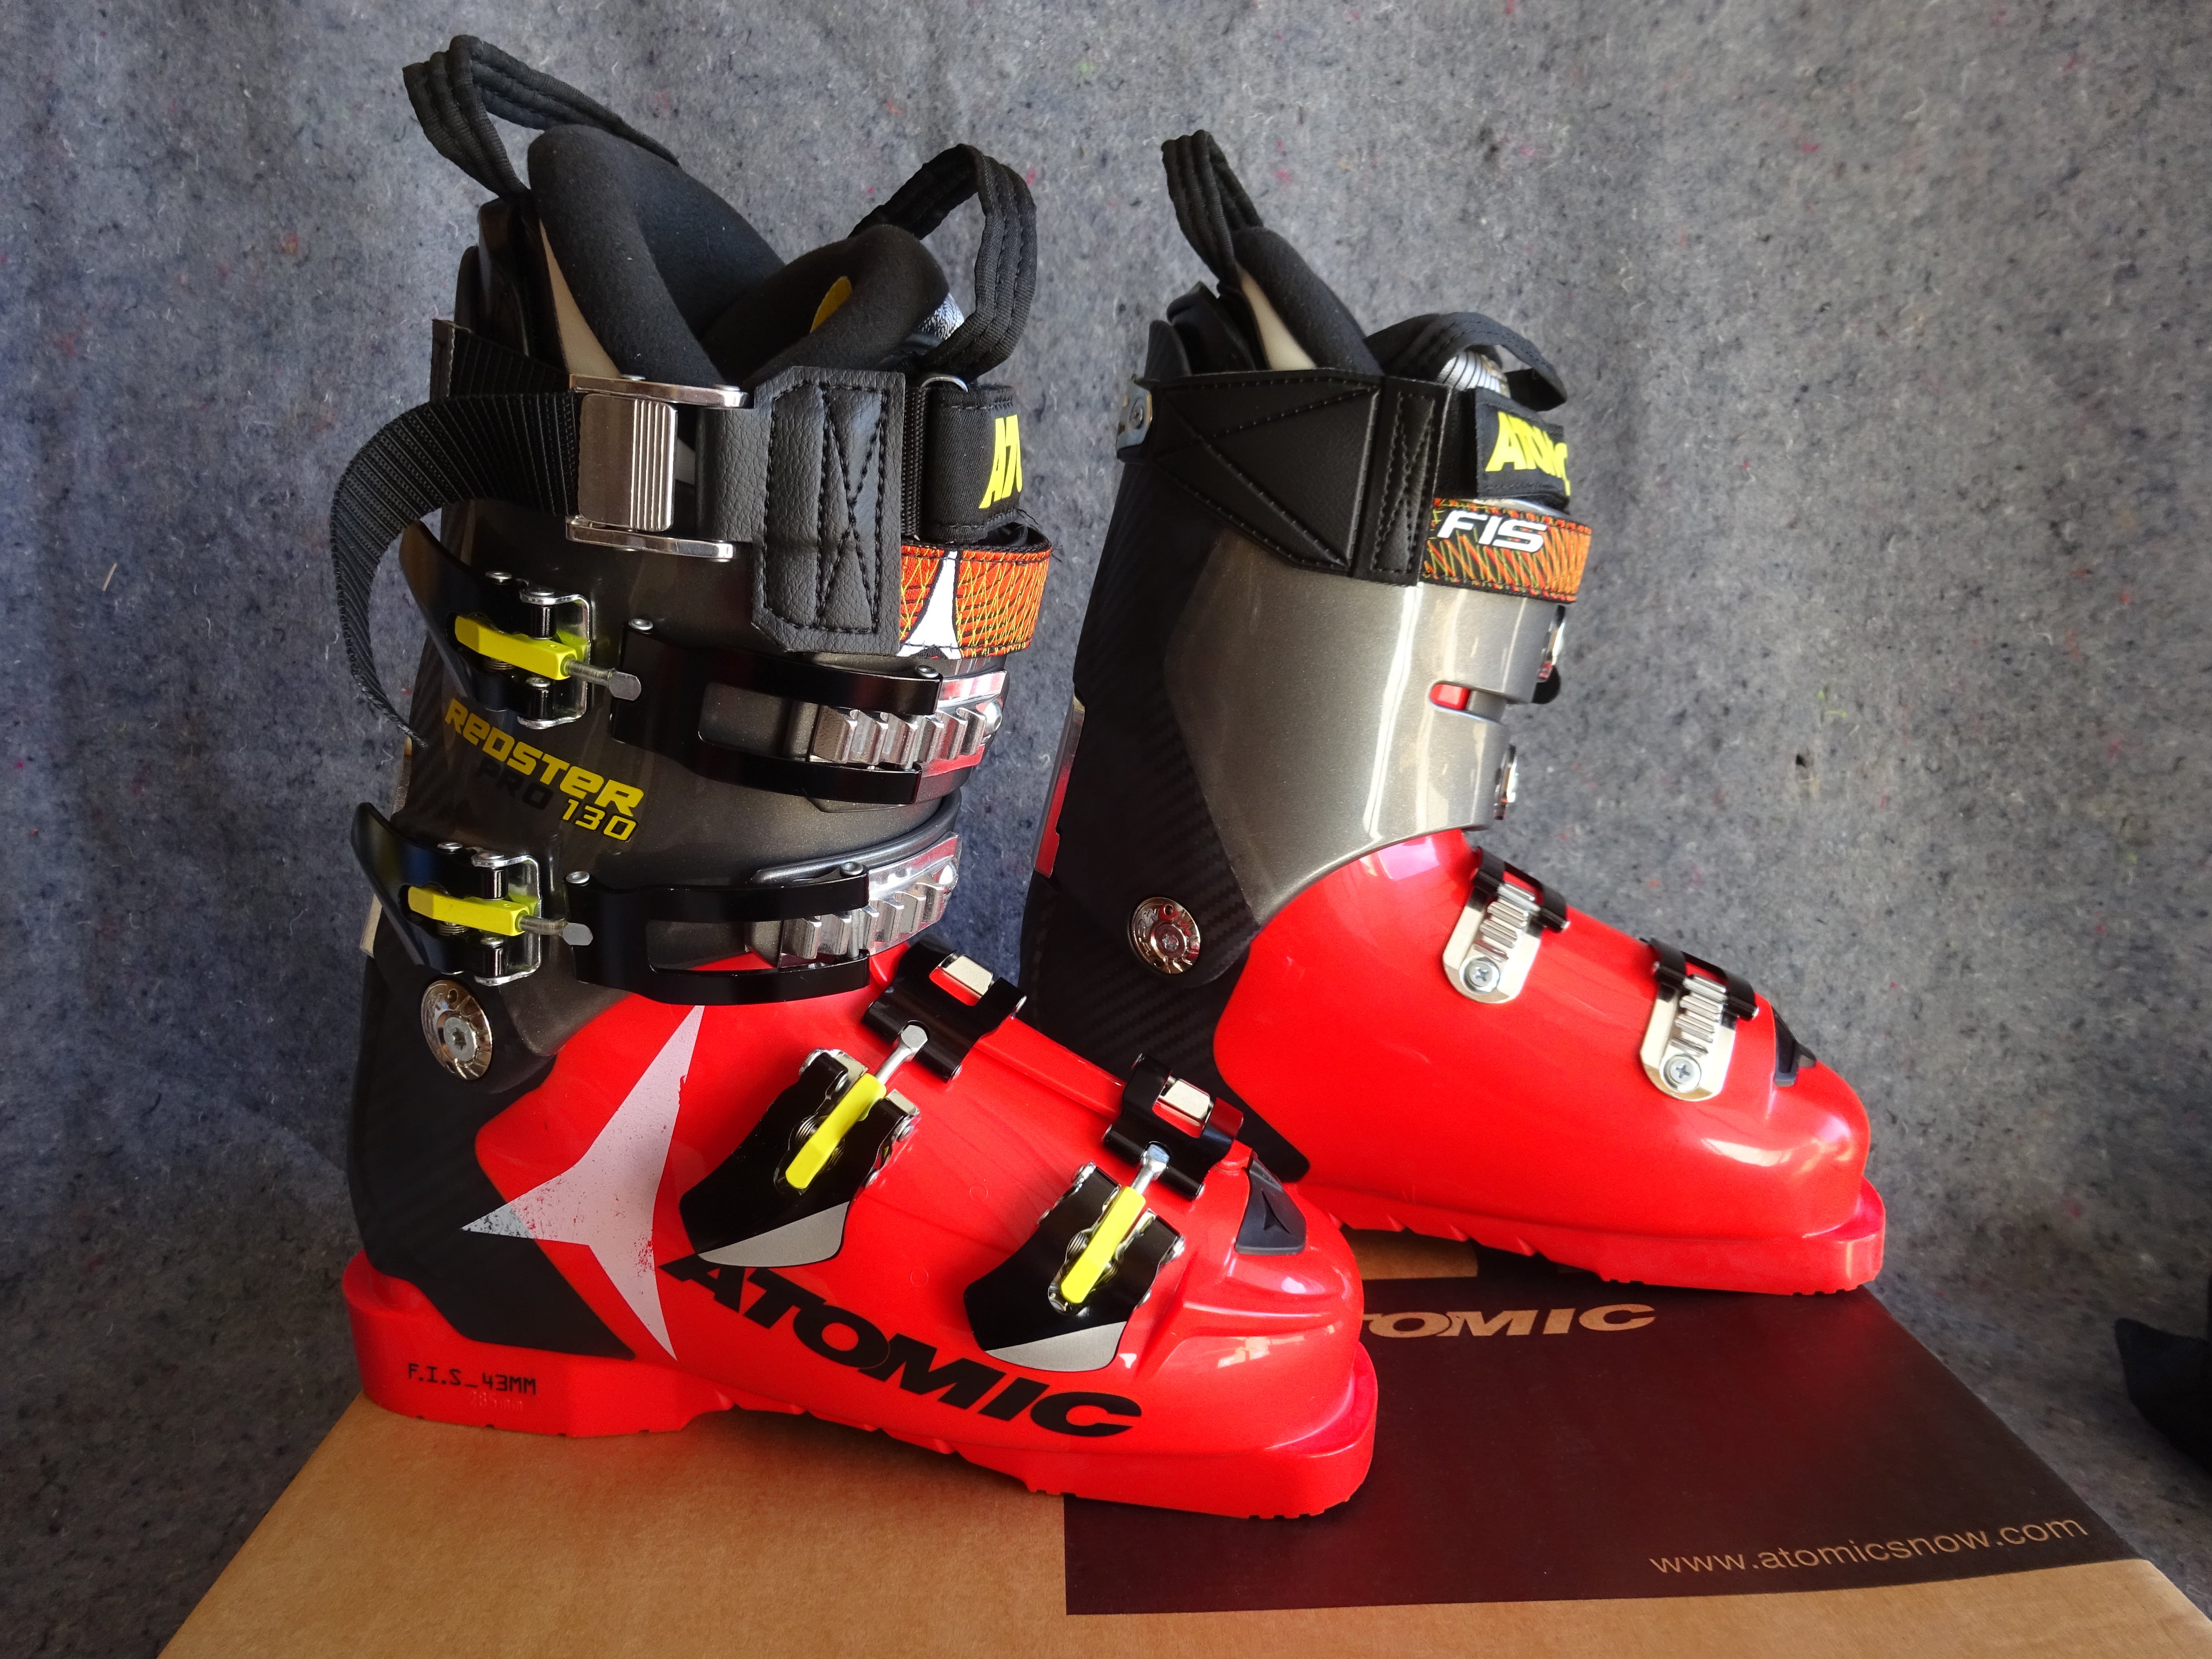 Atomic Redster Club Sport LC 90 Ski Boots | SidelineSwap